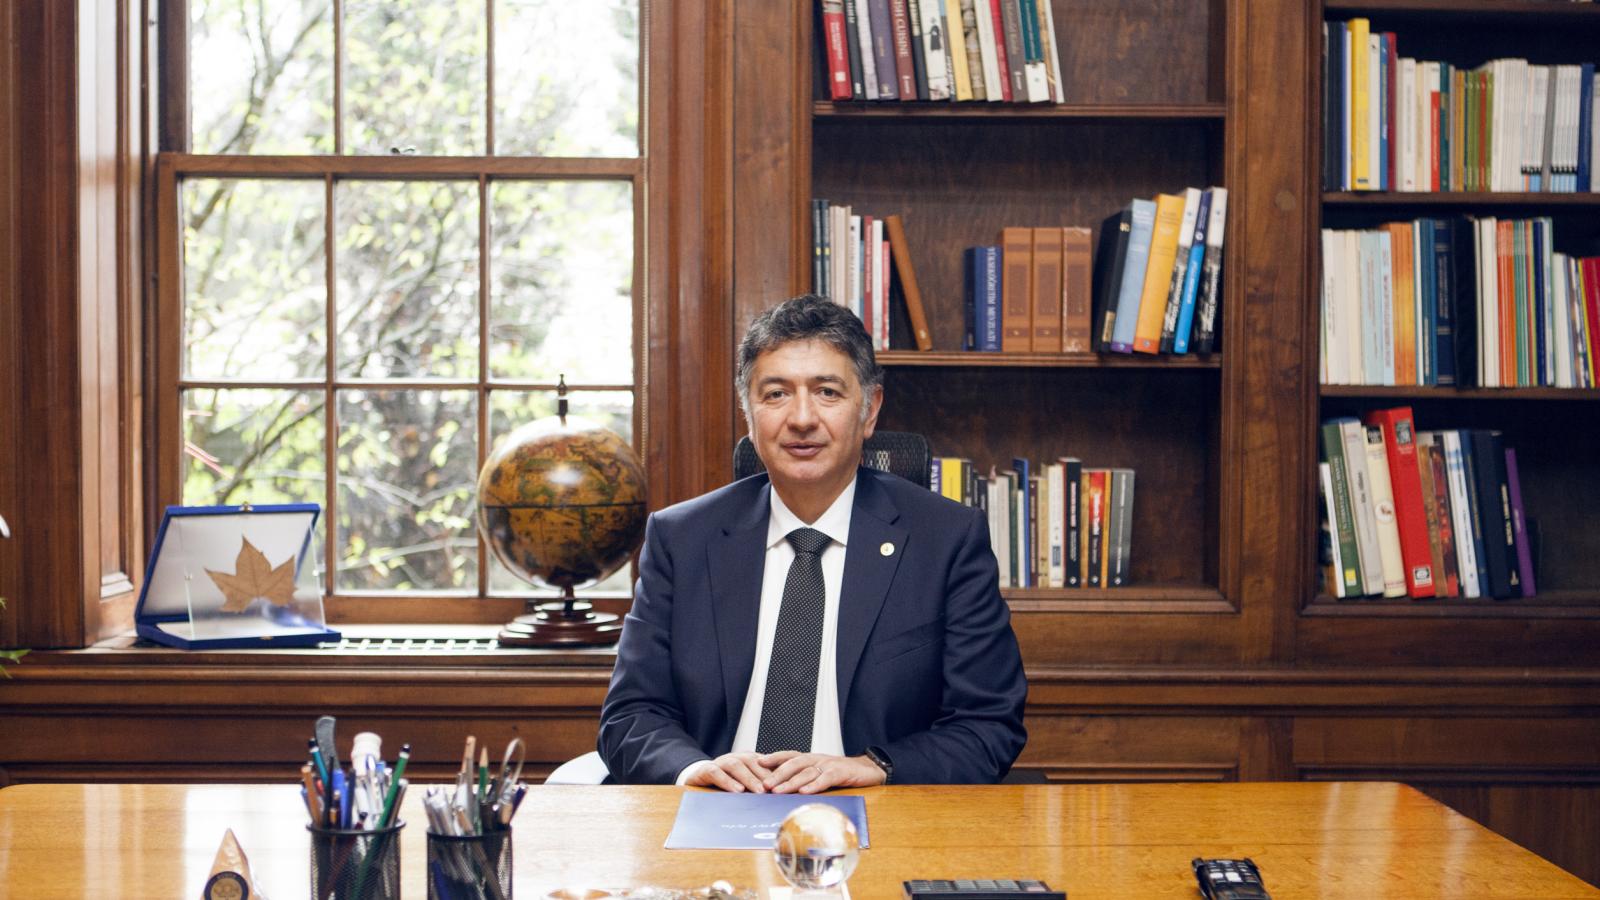 Professor Mehmed Özkan Starts His Term as President of Bogazici University